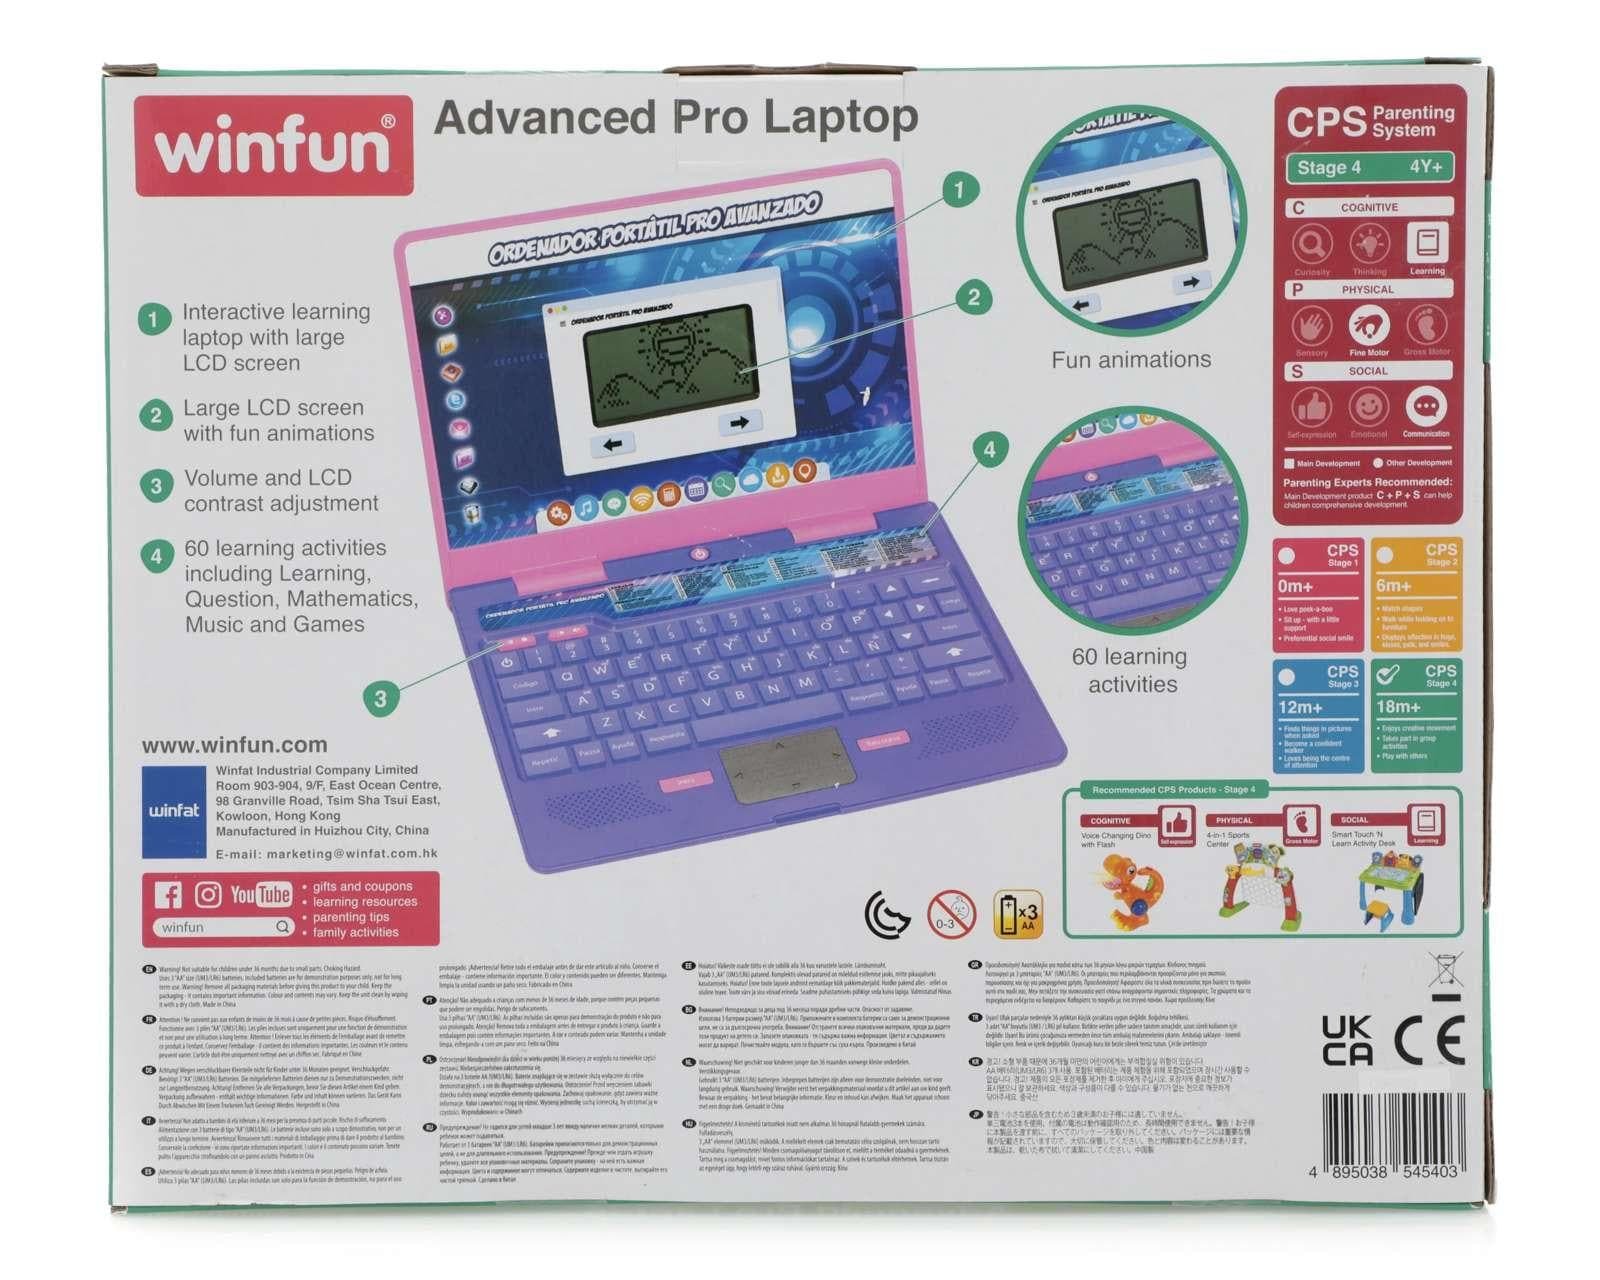 Laptop Educativa tablet infantil WinFun computadora rosa